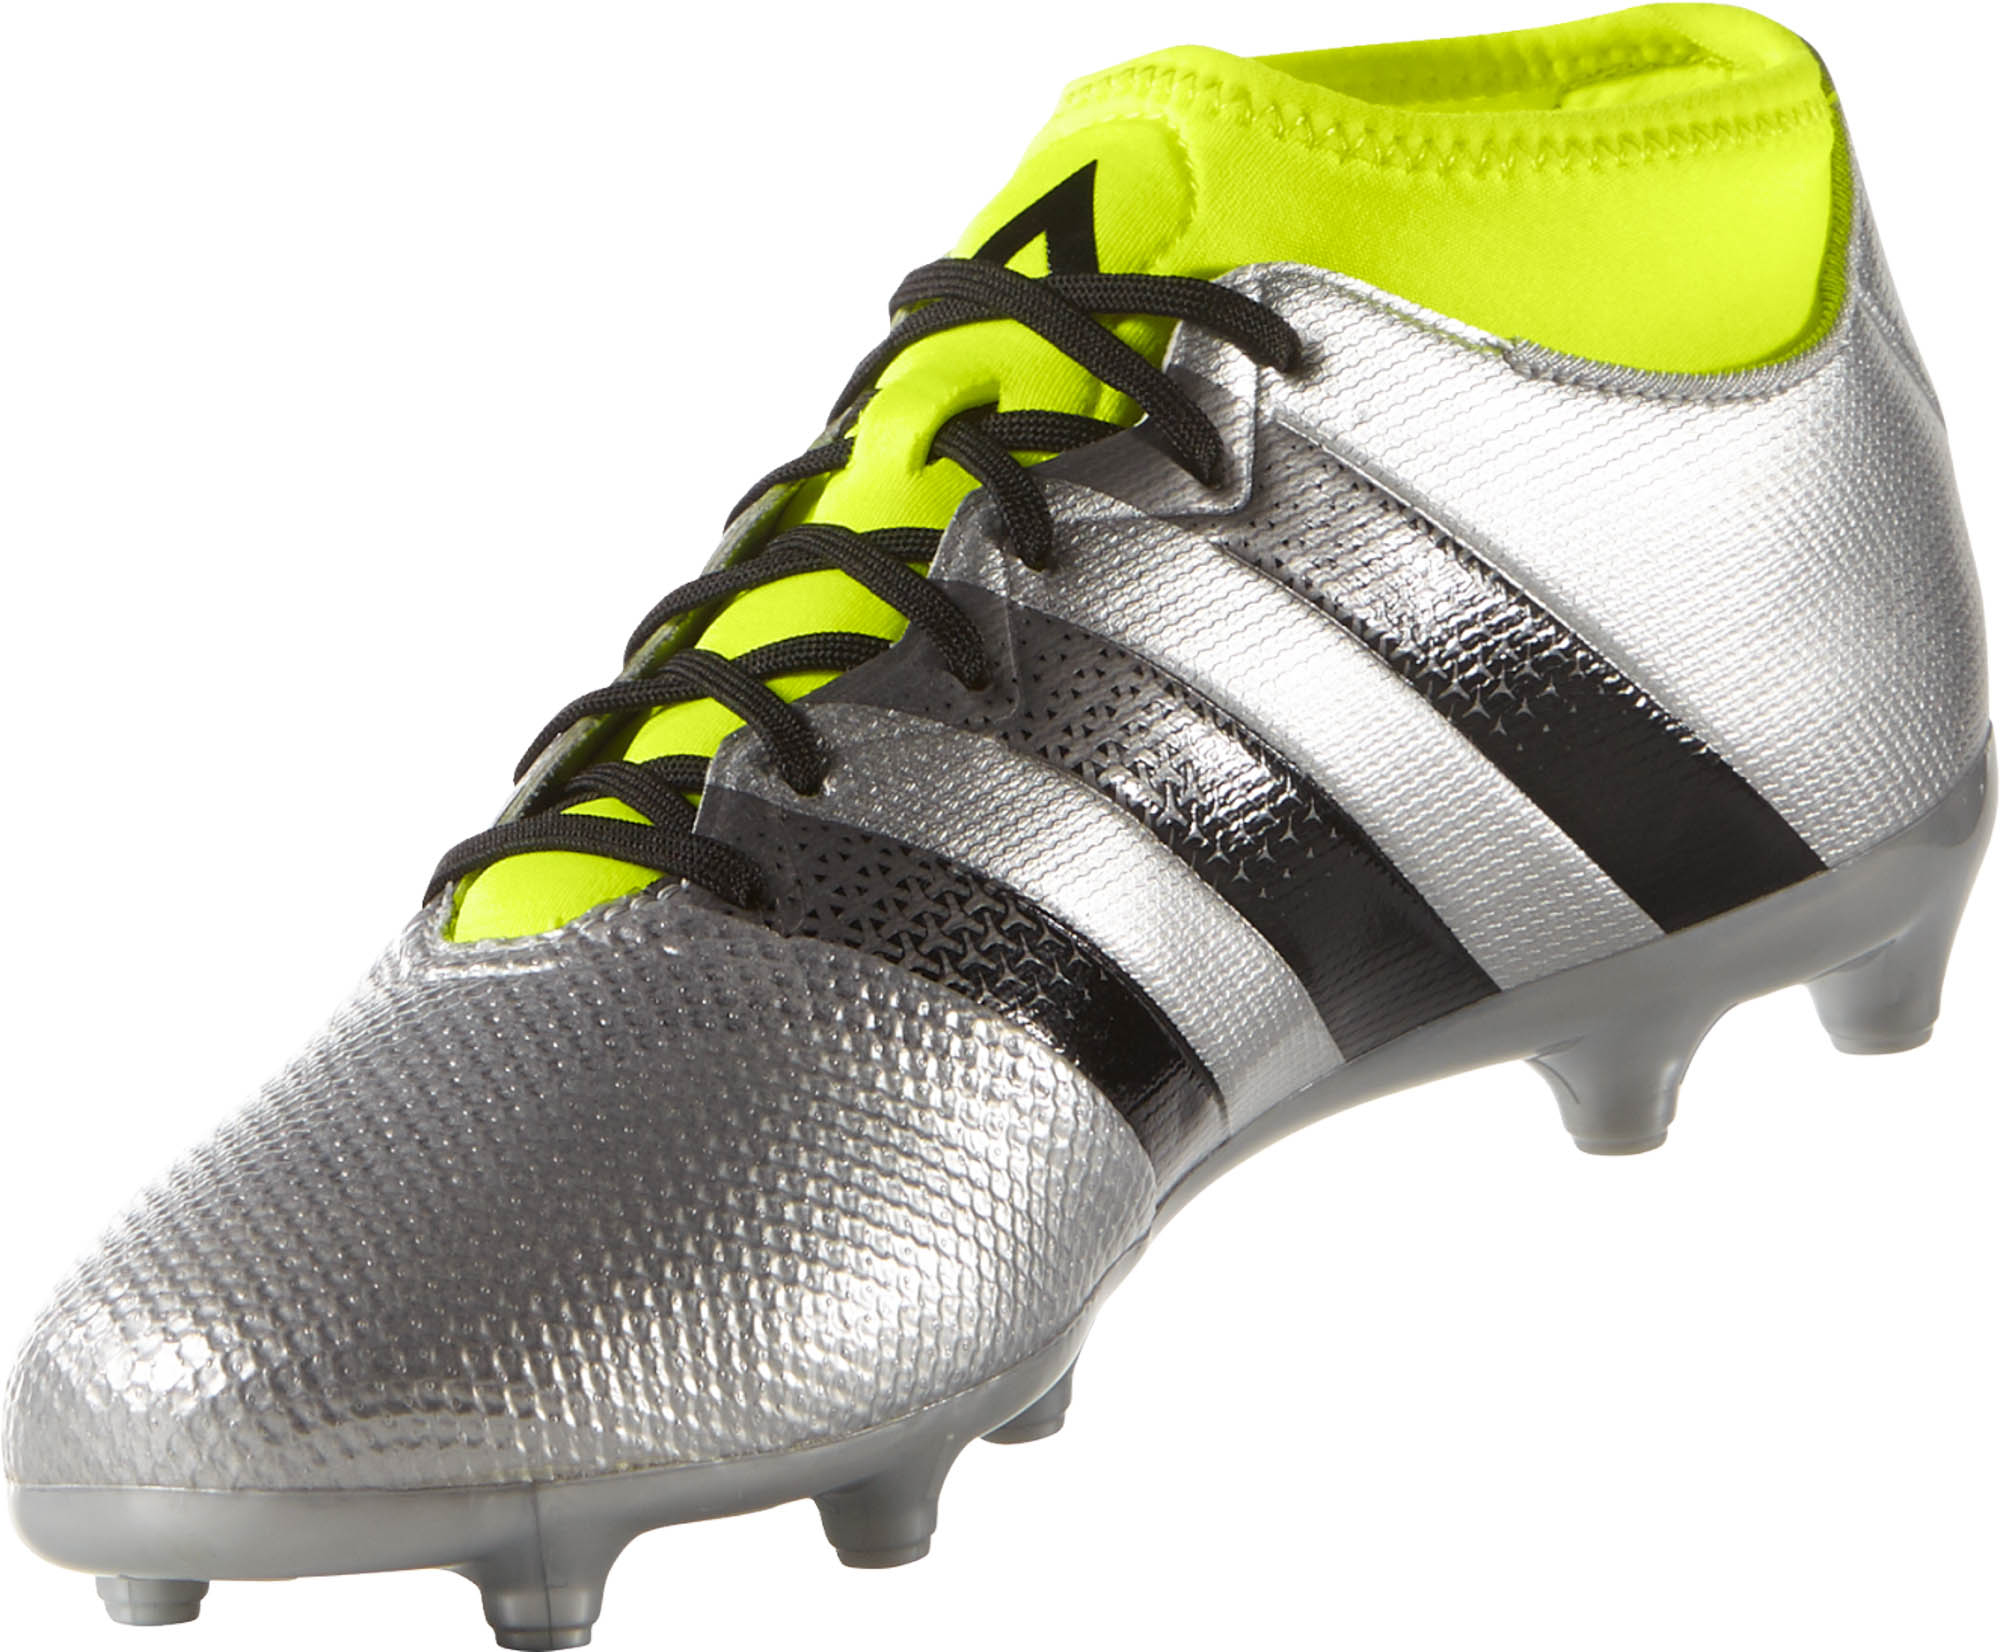 Onzin Wantrouwen spons adidas ACE 16.3 Primemesh FG Cleats - Silver adidas Soccer Shoes